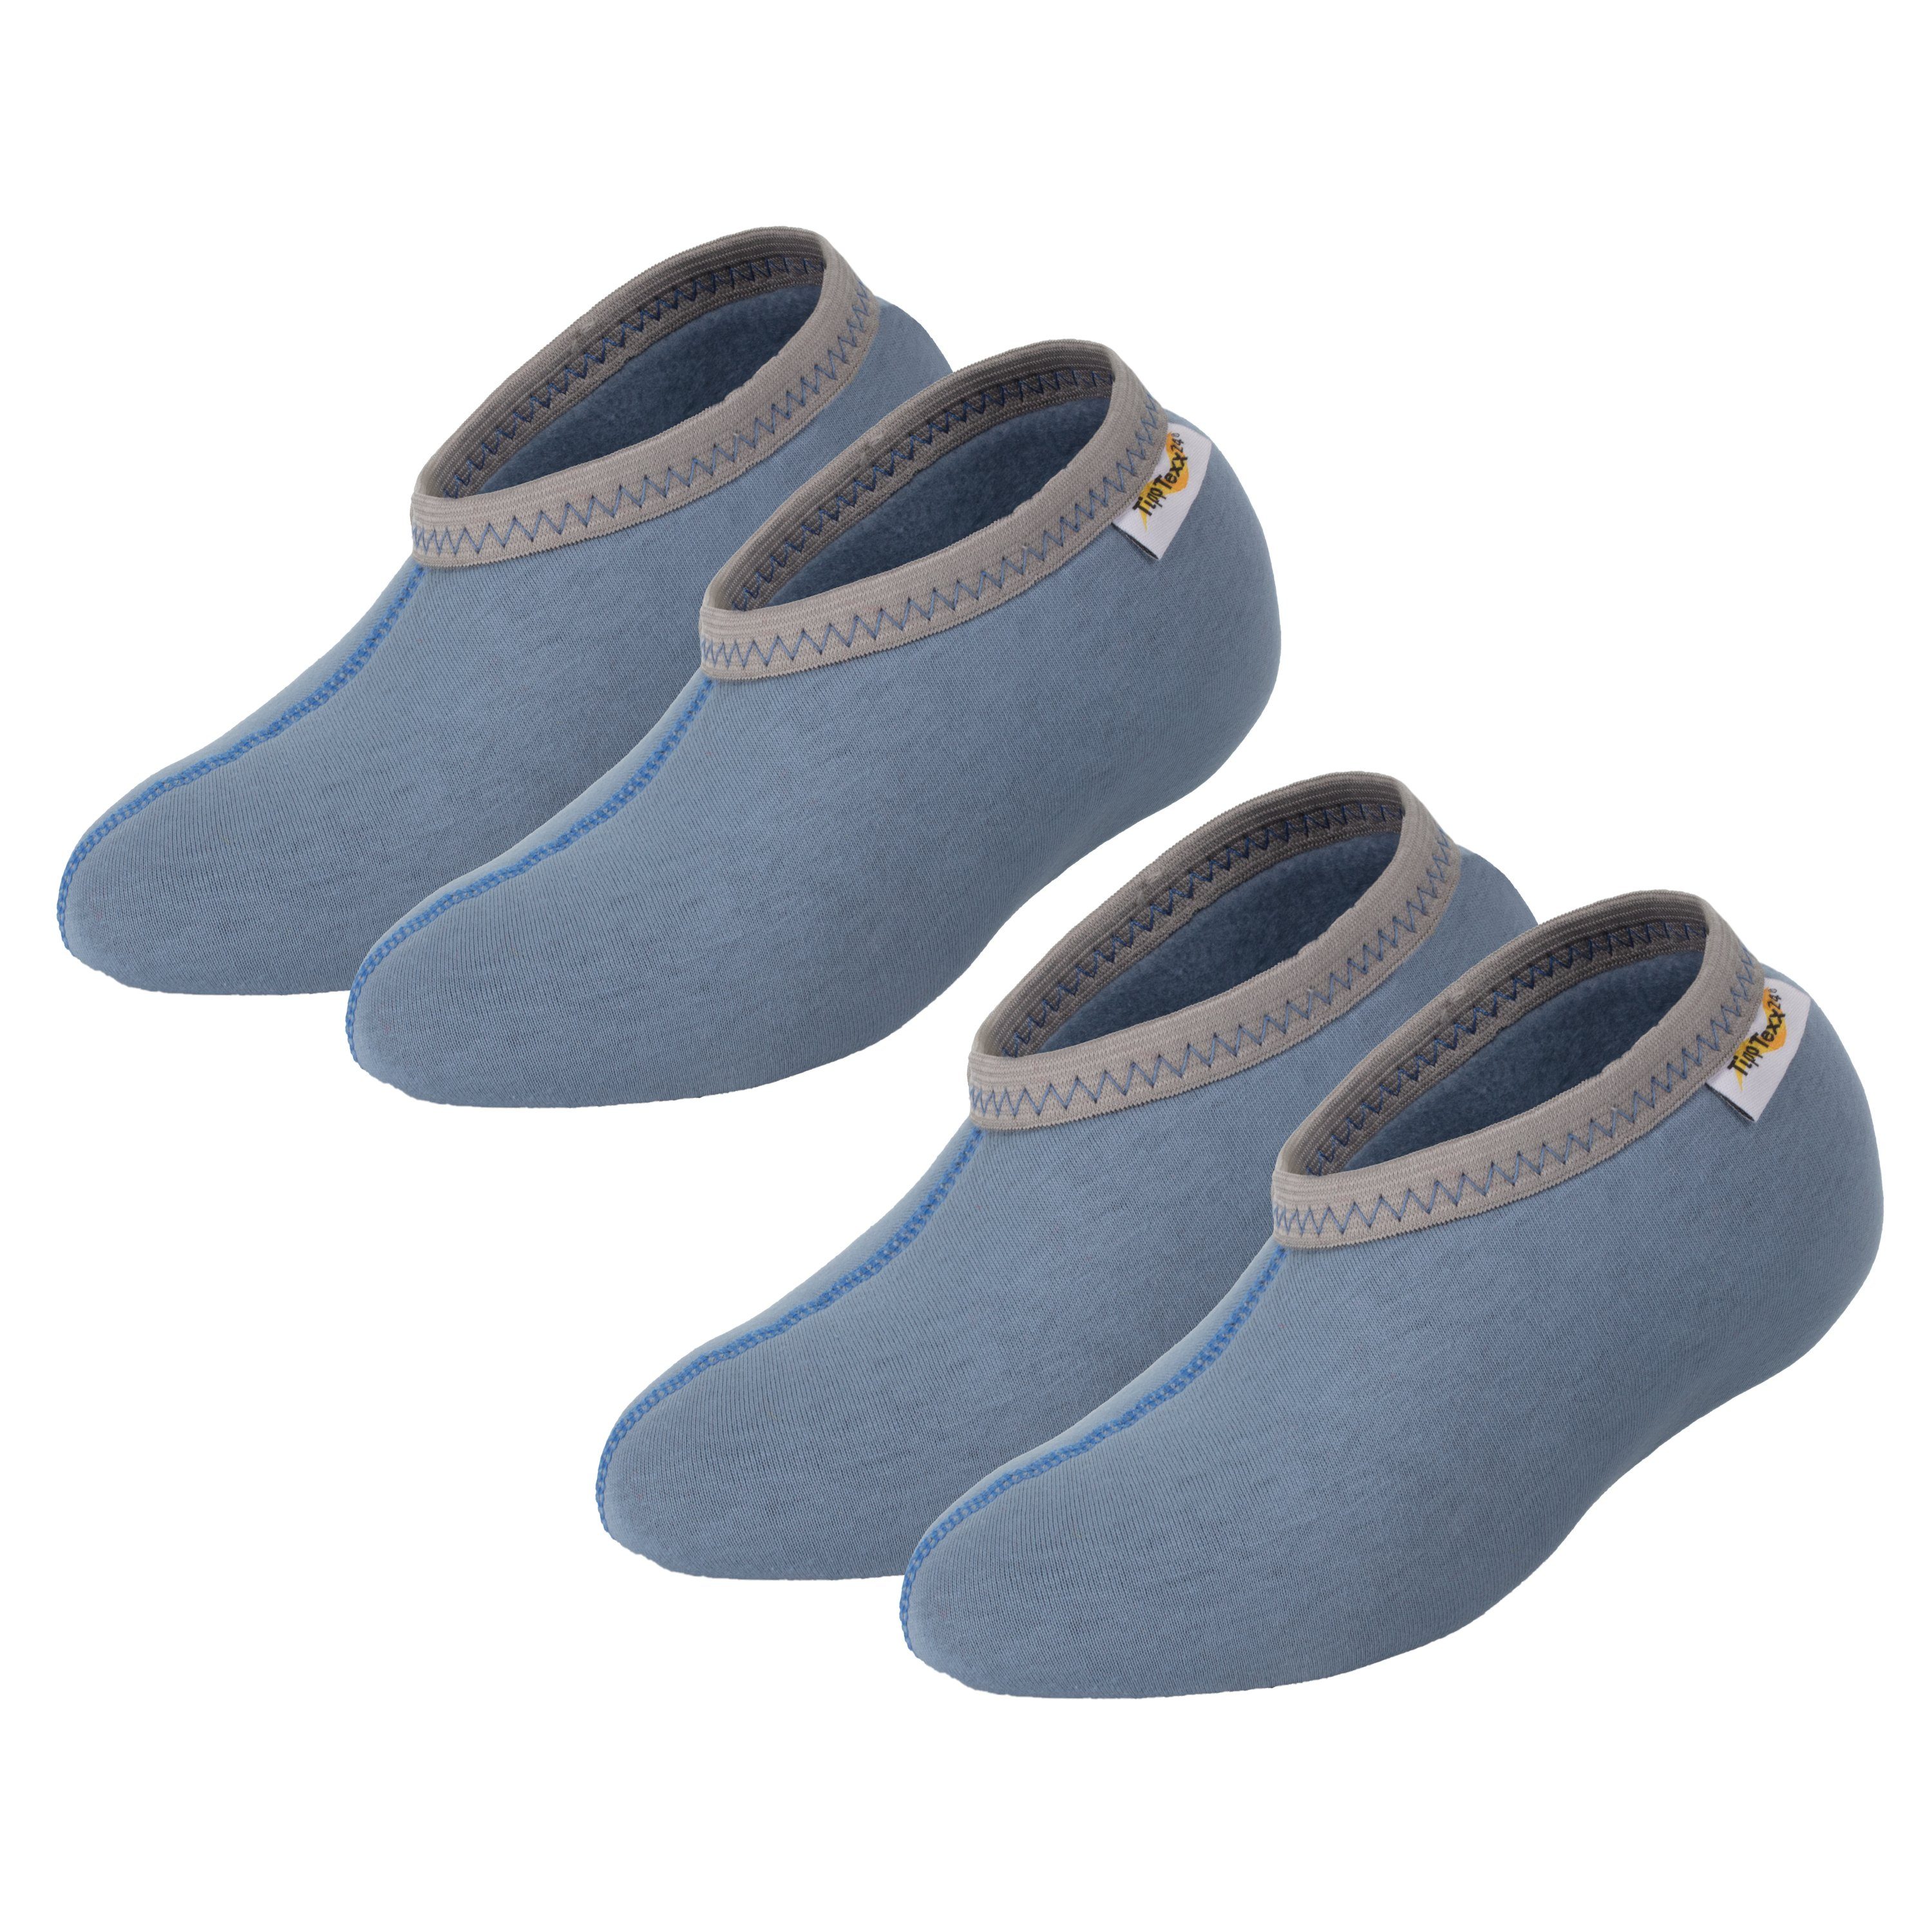 TippTexx 24 Socken 2 Paar Stiefelsocken 100% Baumwolle Gummistiefelsocken Nässeschutz Blau